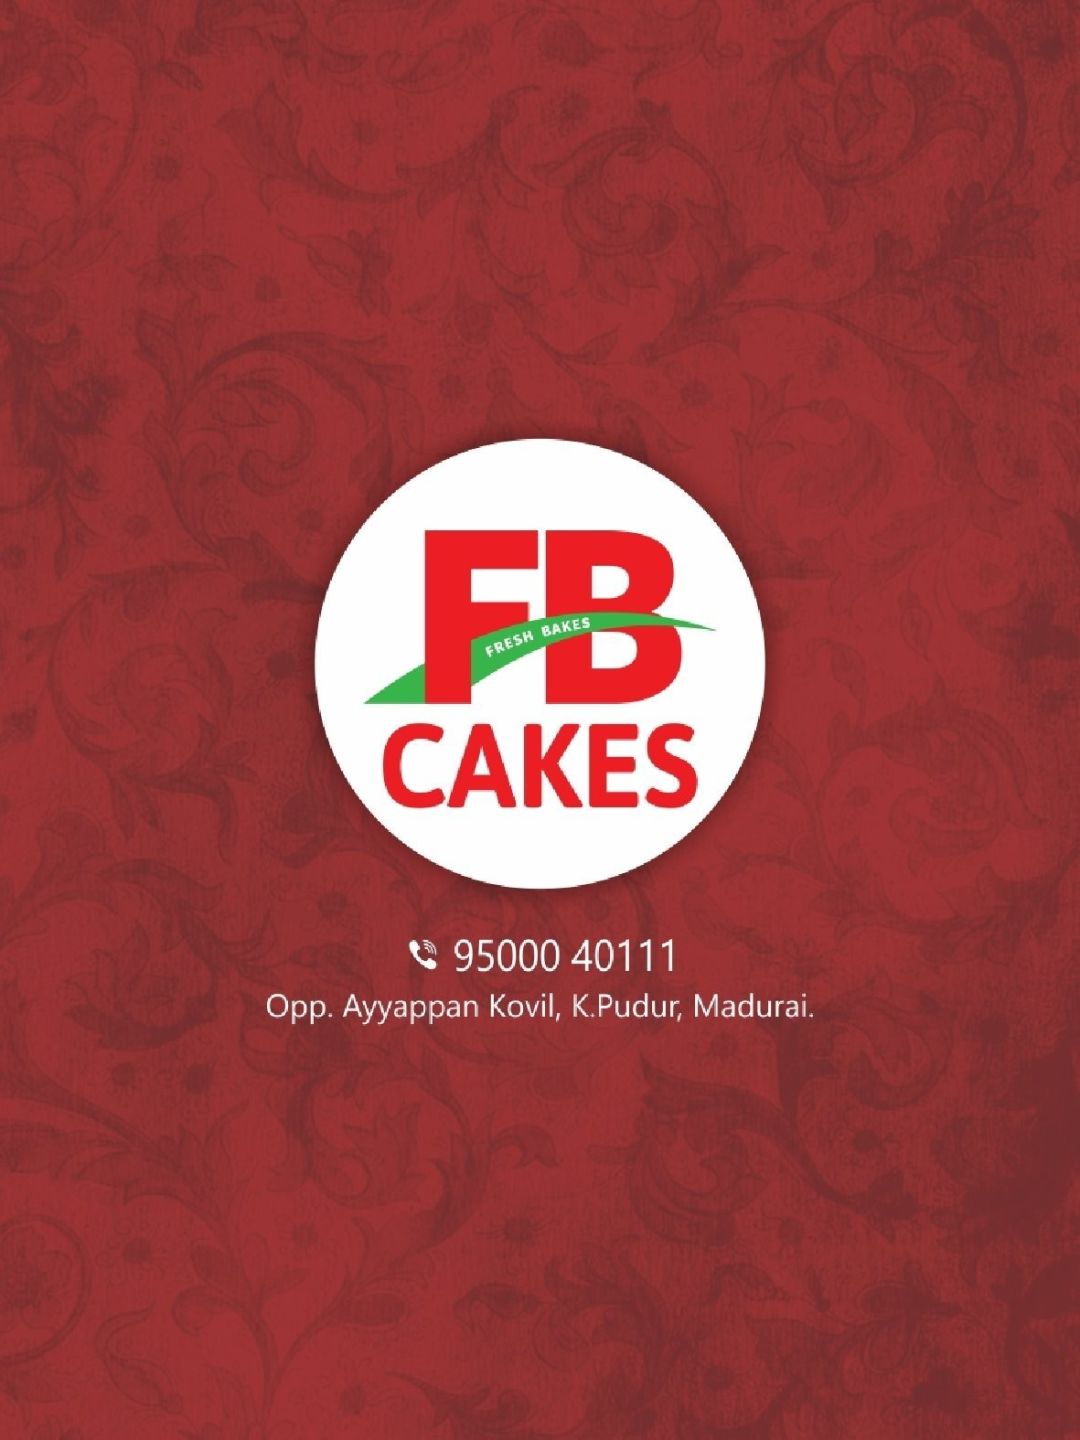 Share 107+ fb cakes coimbatore best